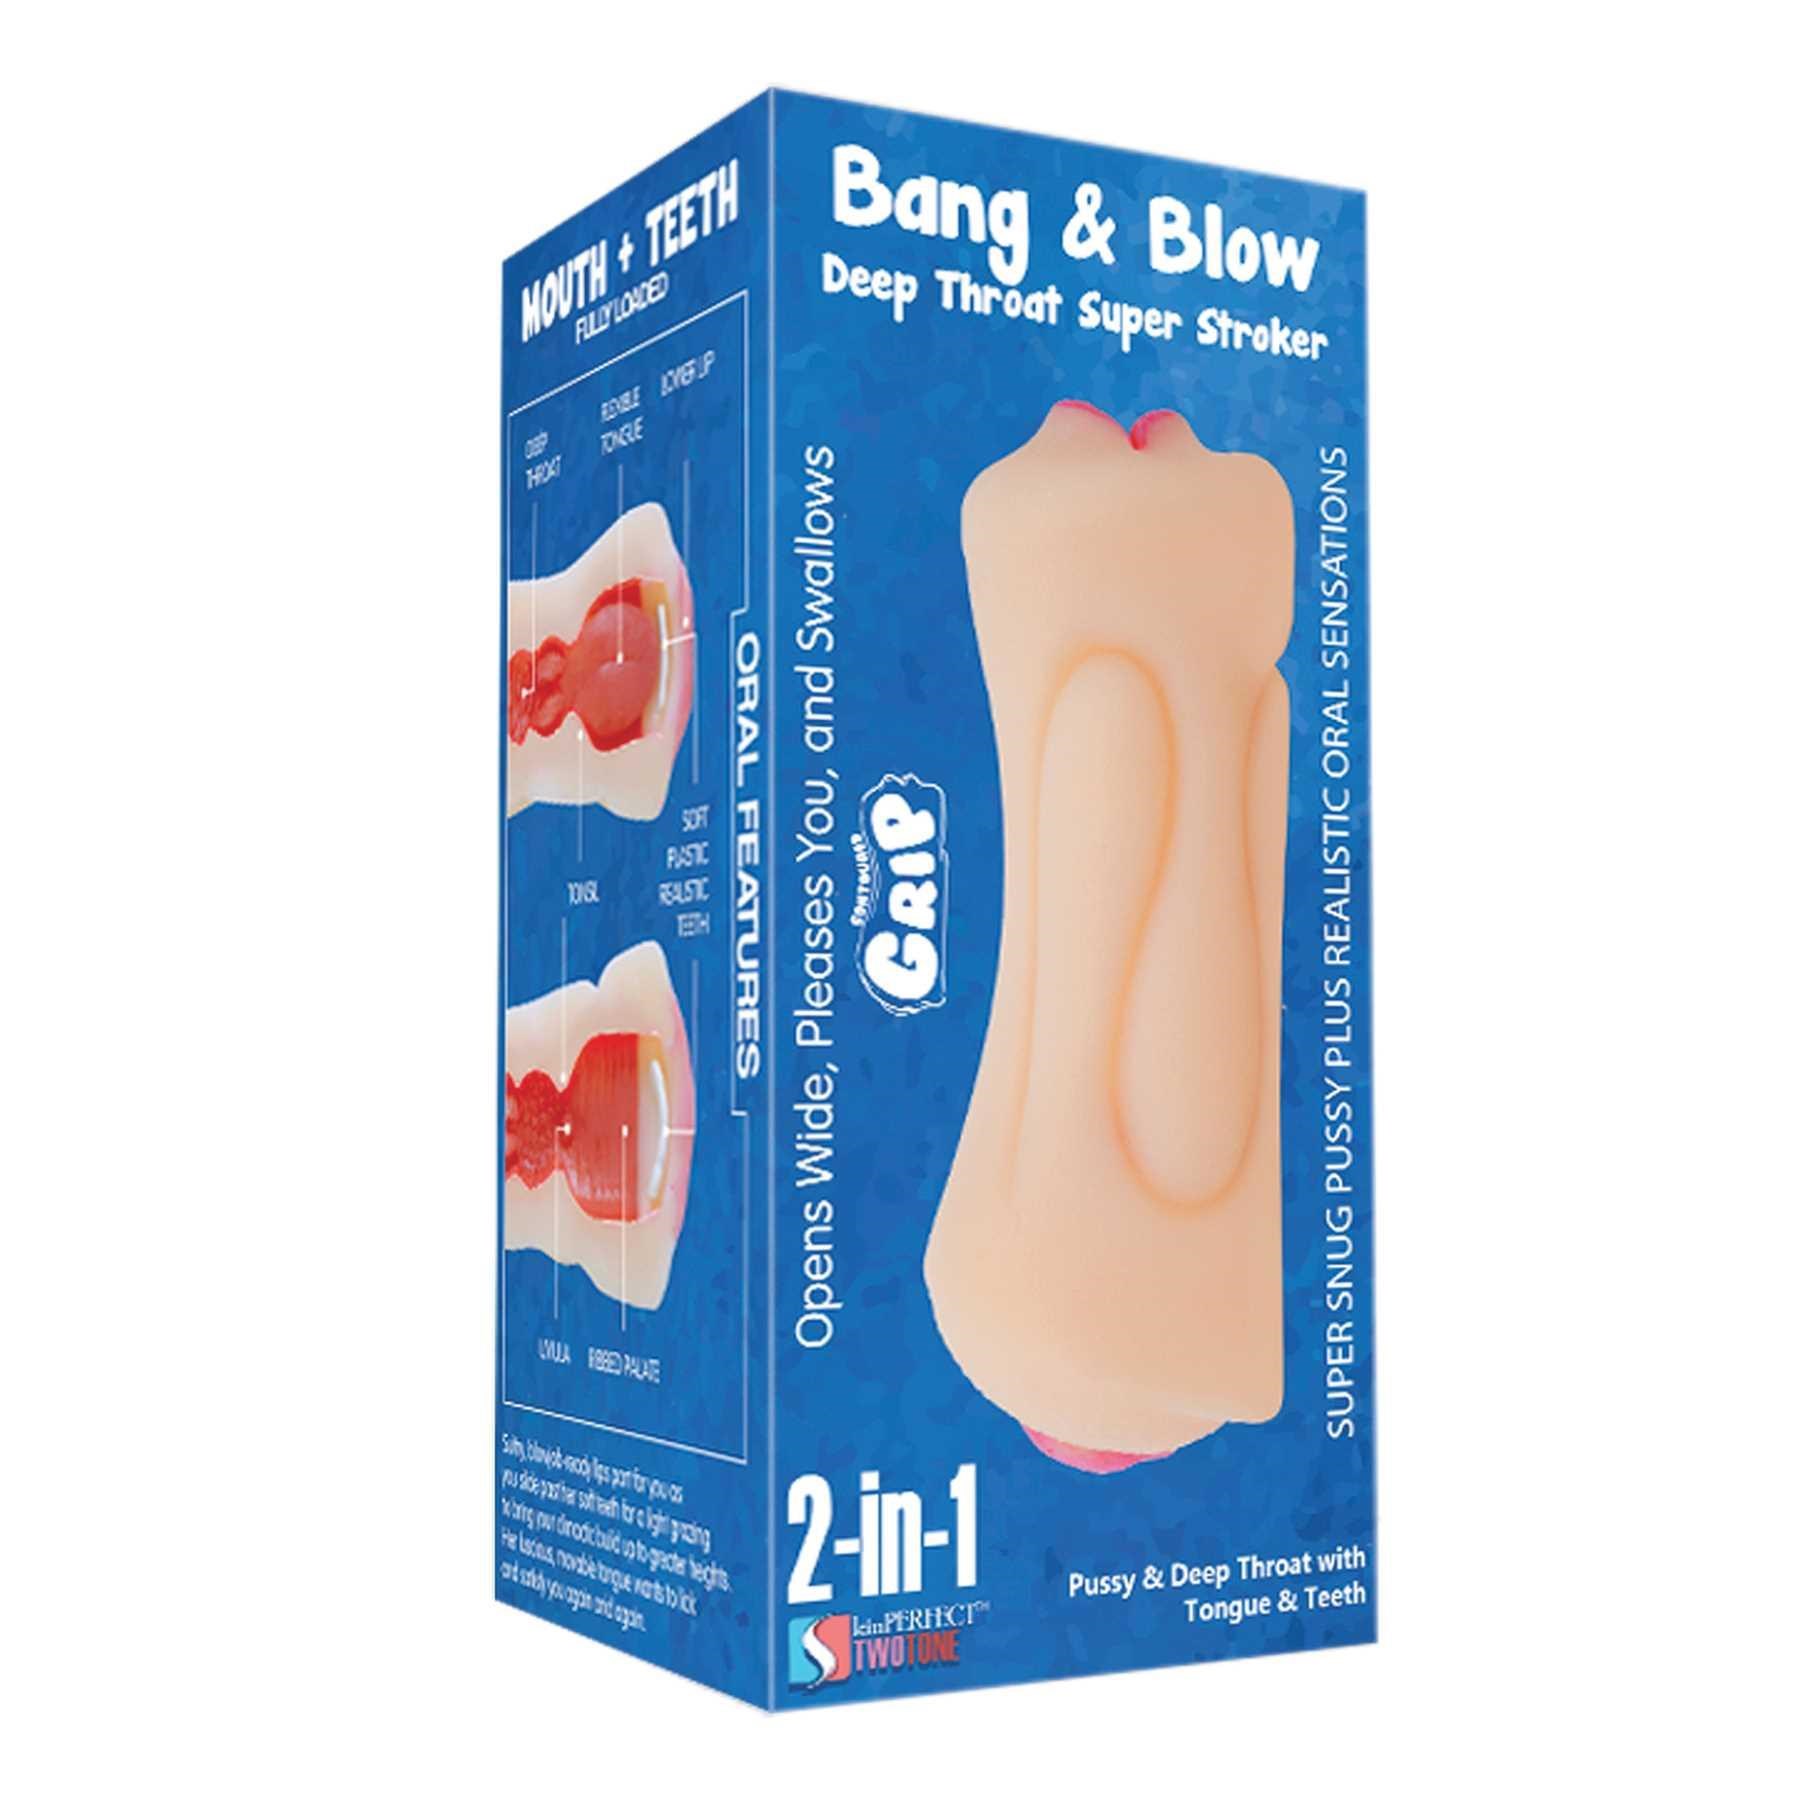 bang and blow super stroker box packaging